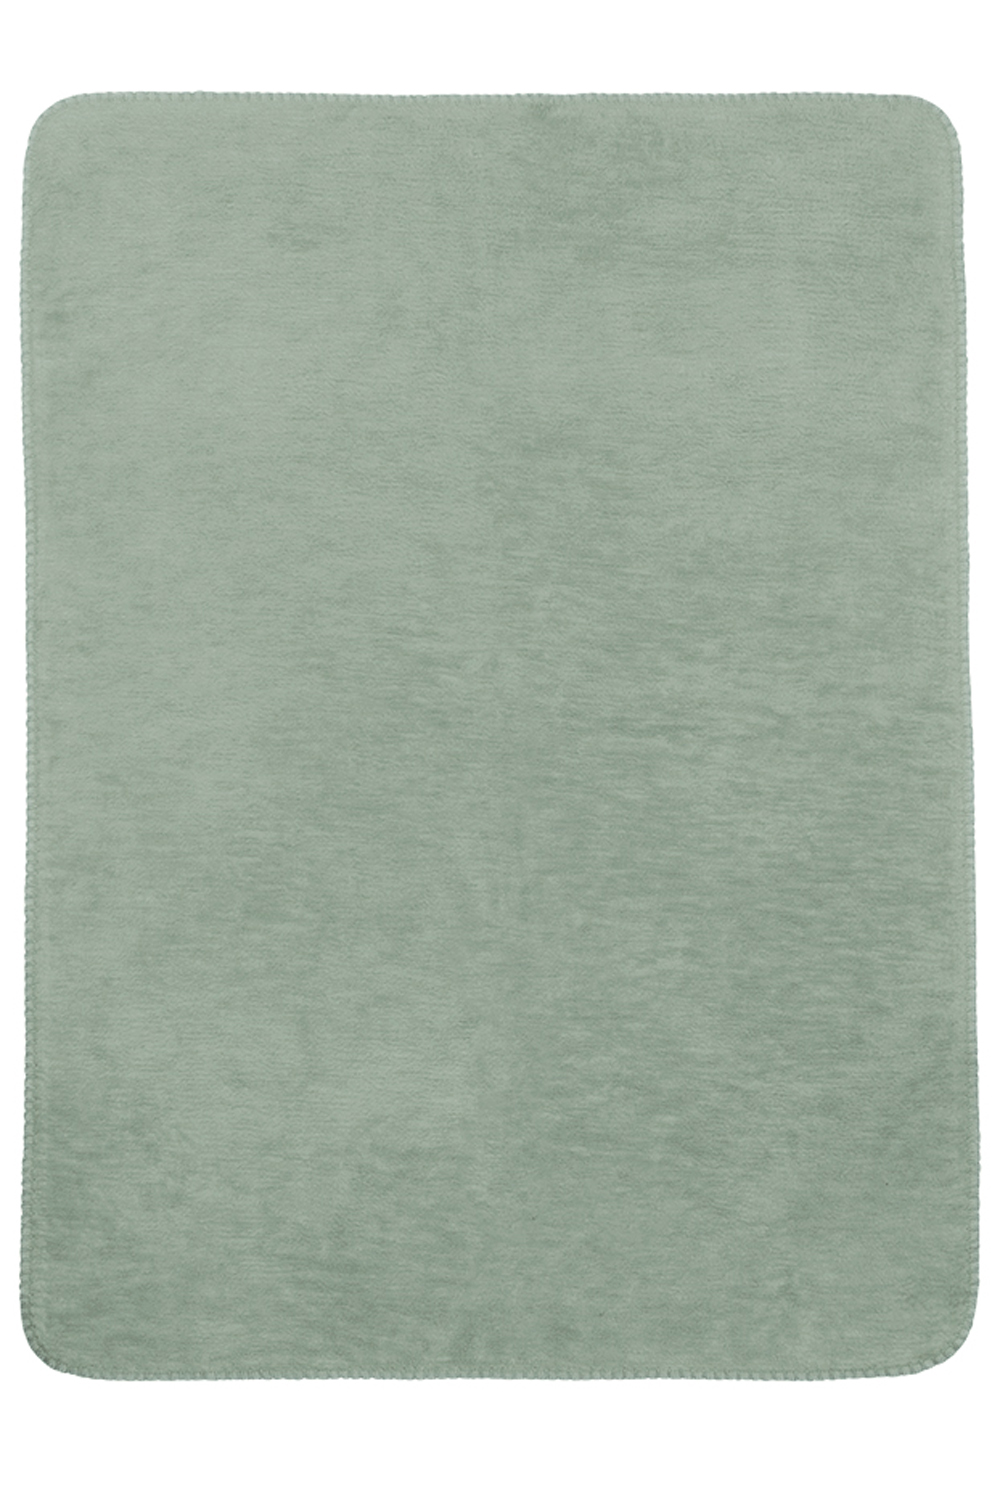 Ledikantdeken Uni - Stone Green - 100x150cm